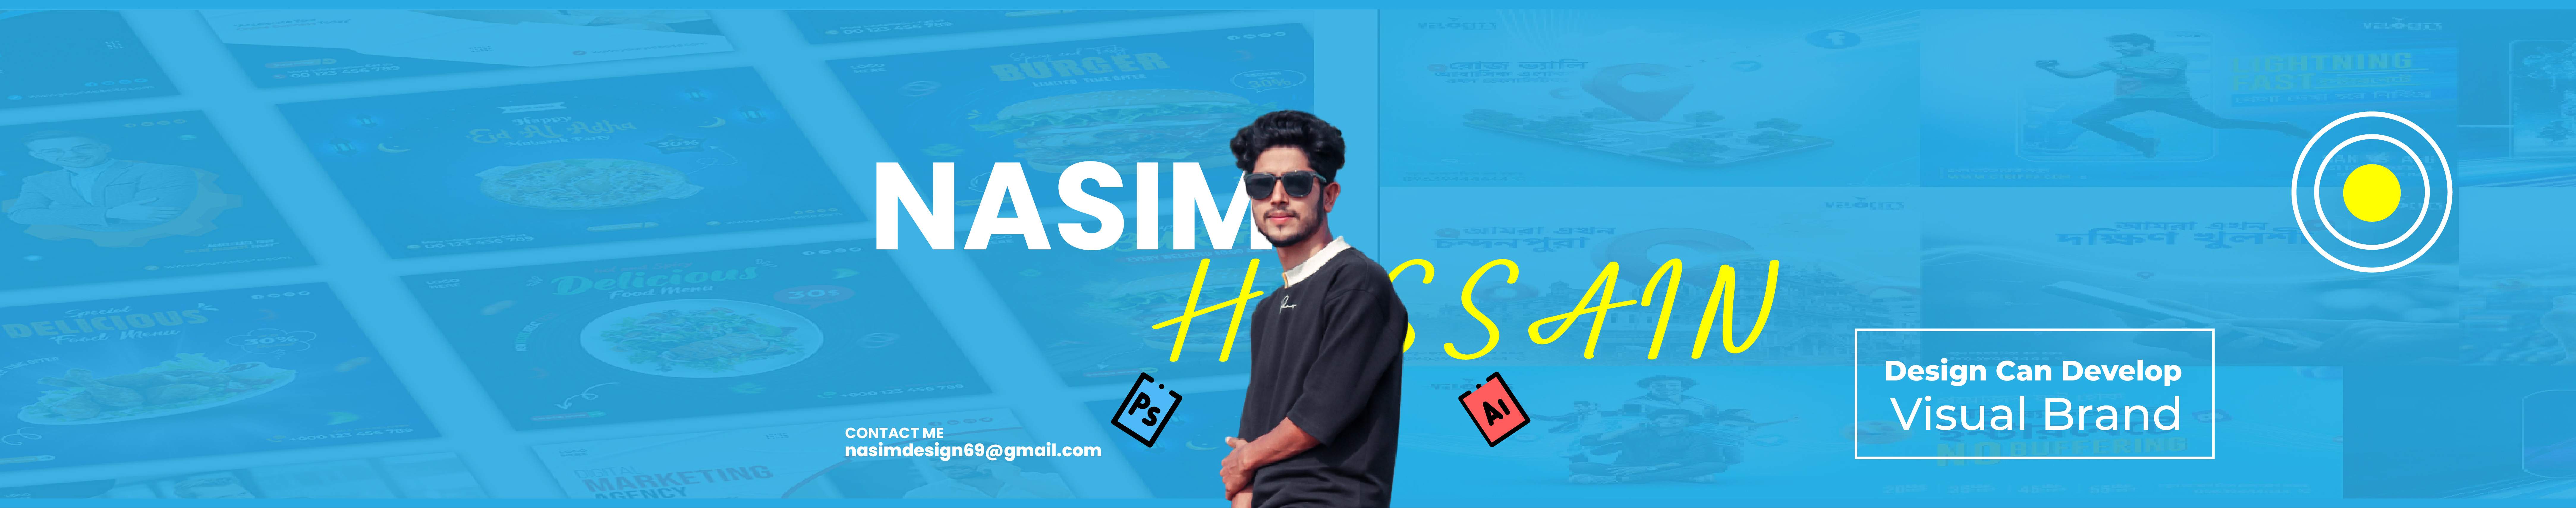 Nasim Hossains profilbanner